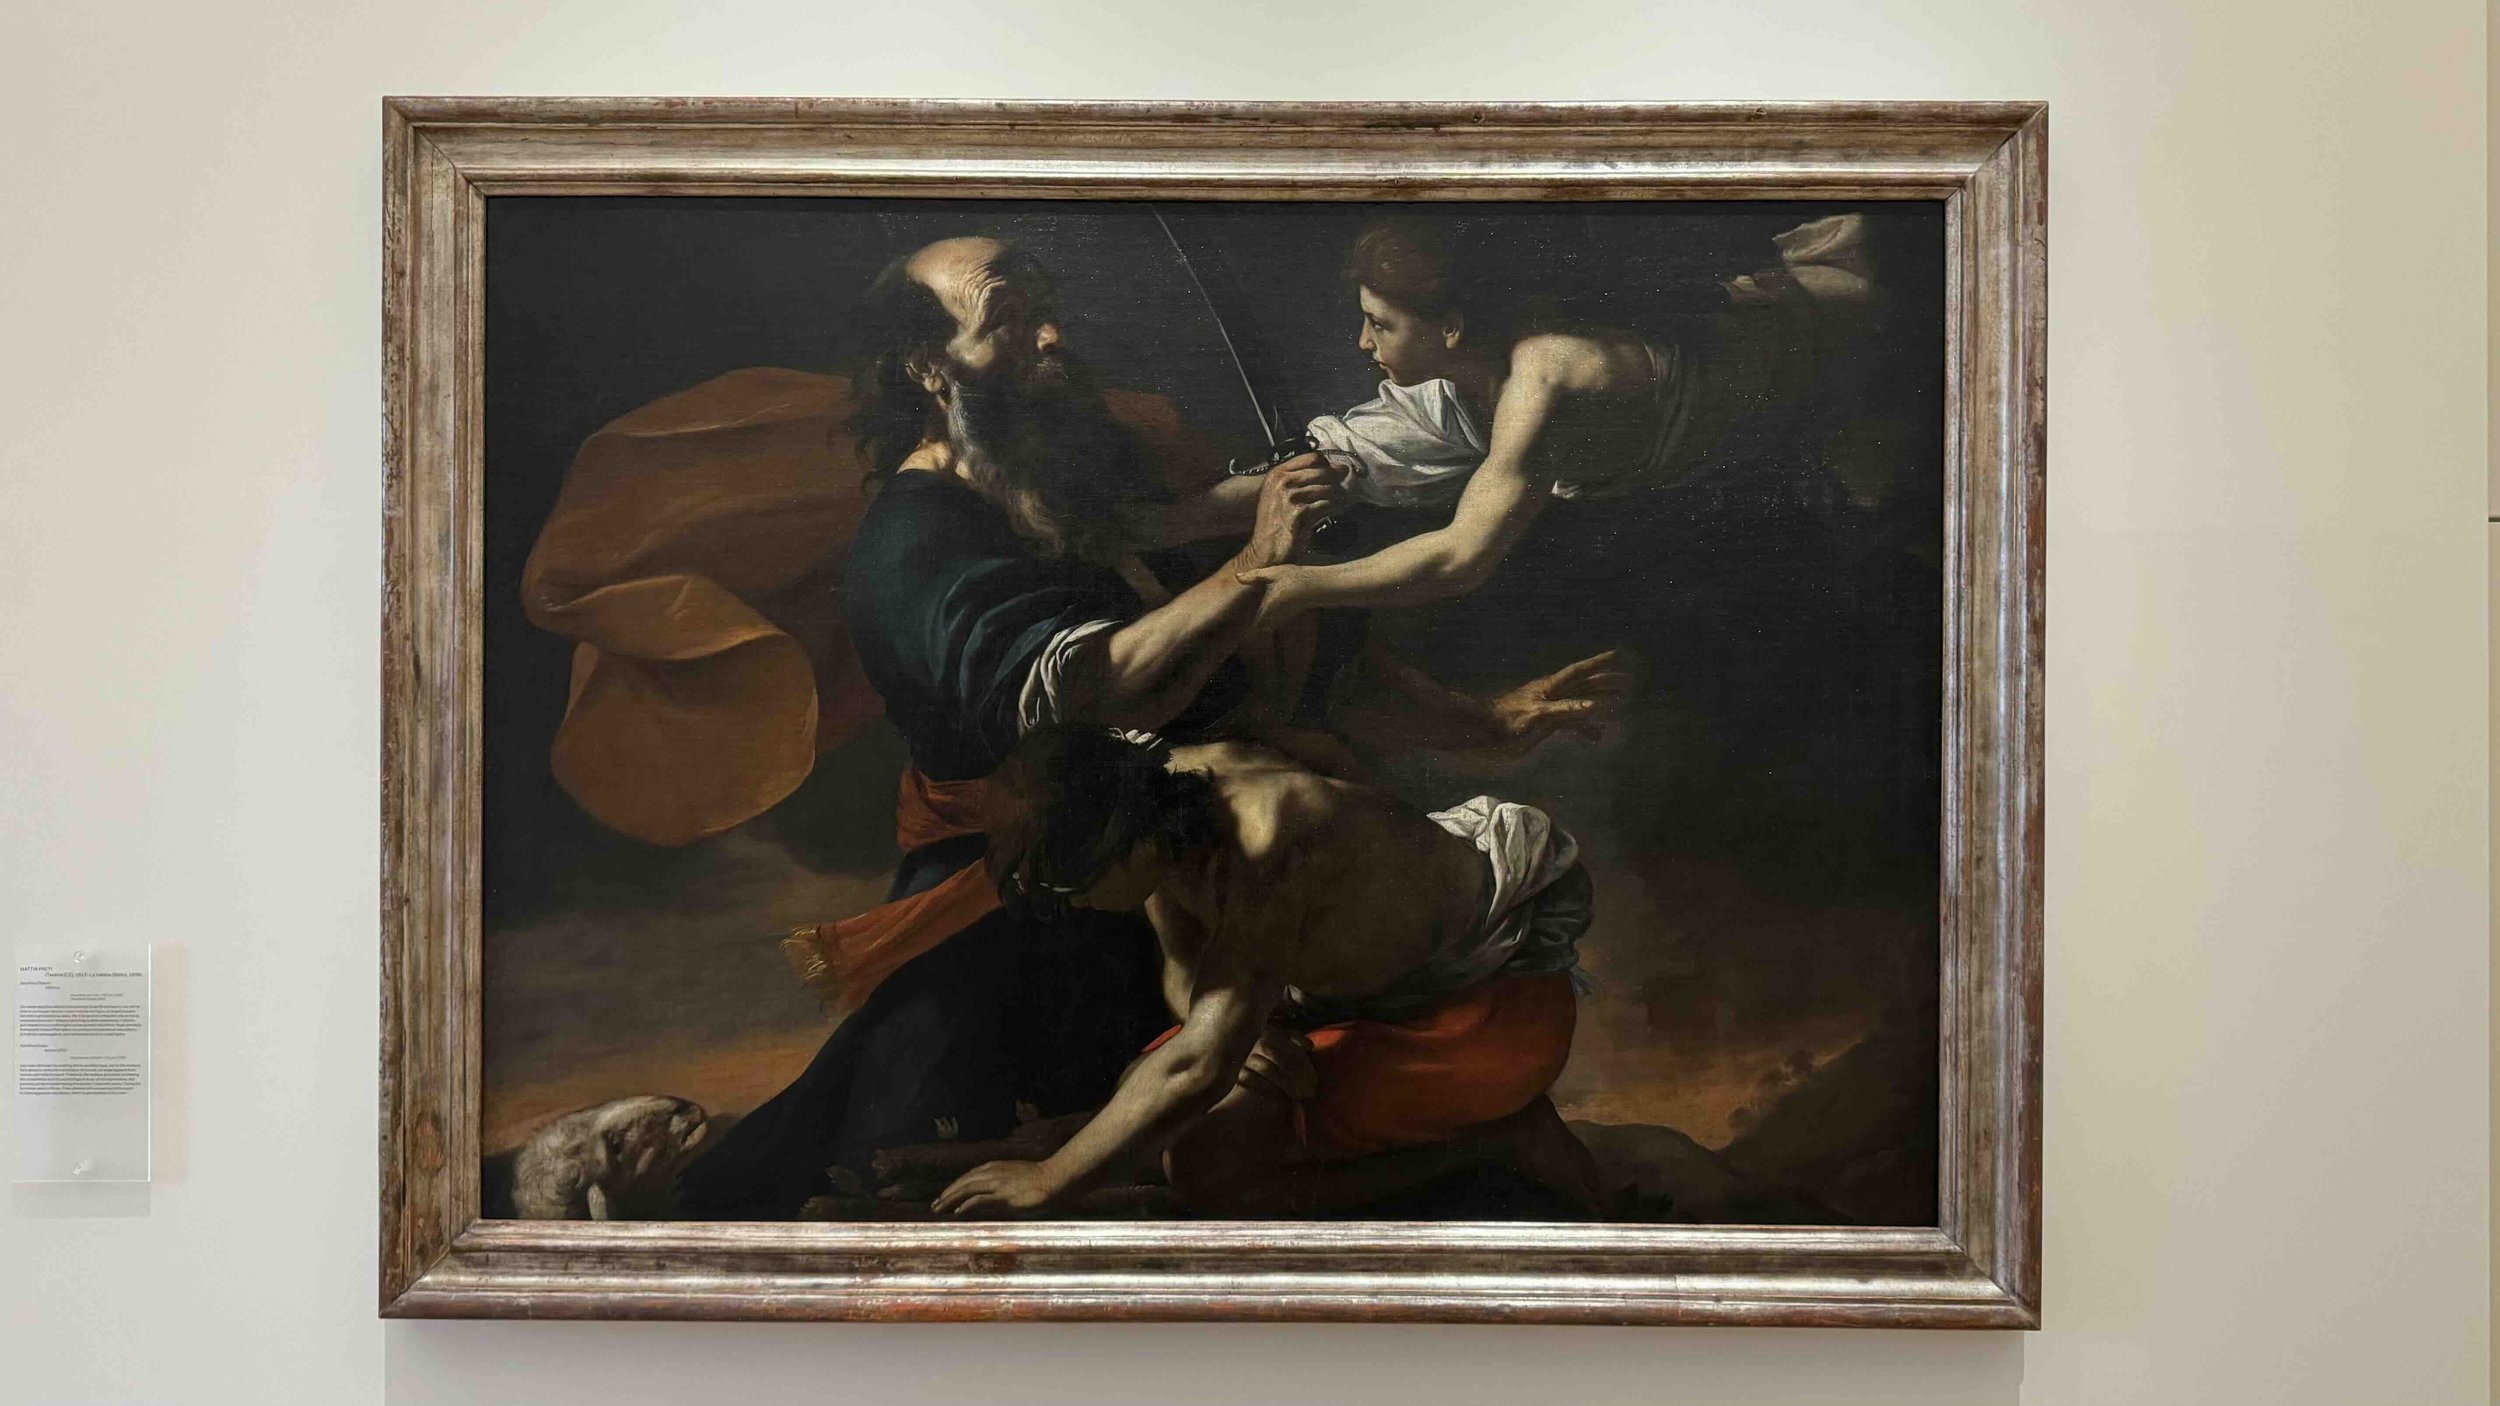 208 Mattia Preti, Sacrificio d'Isacco, 1650.jpeg